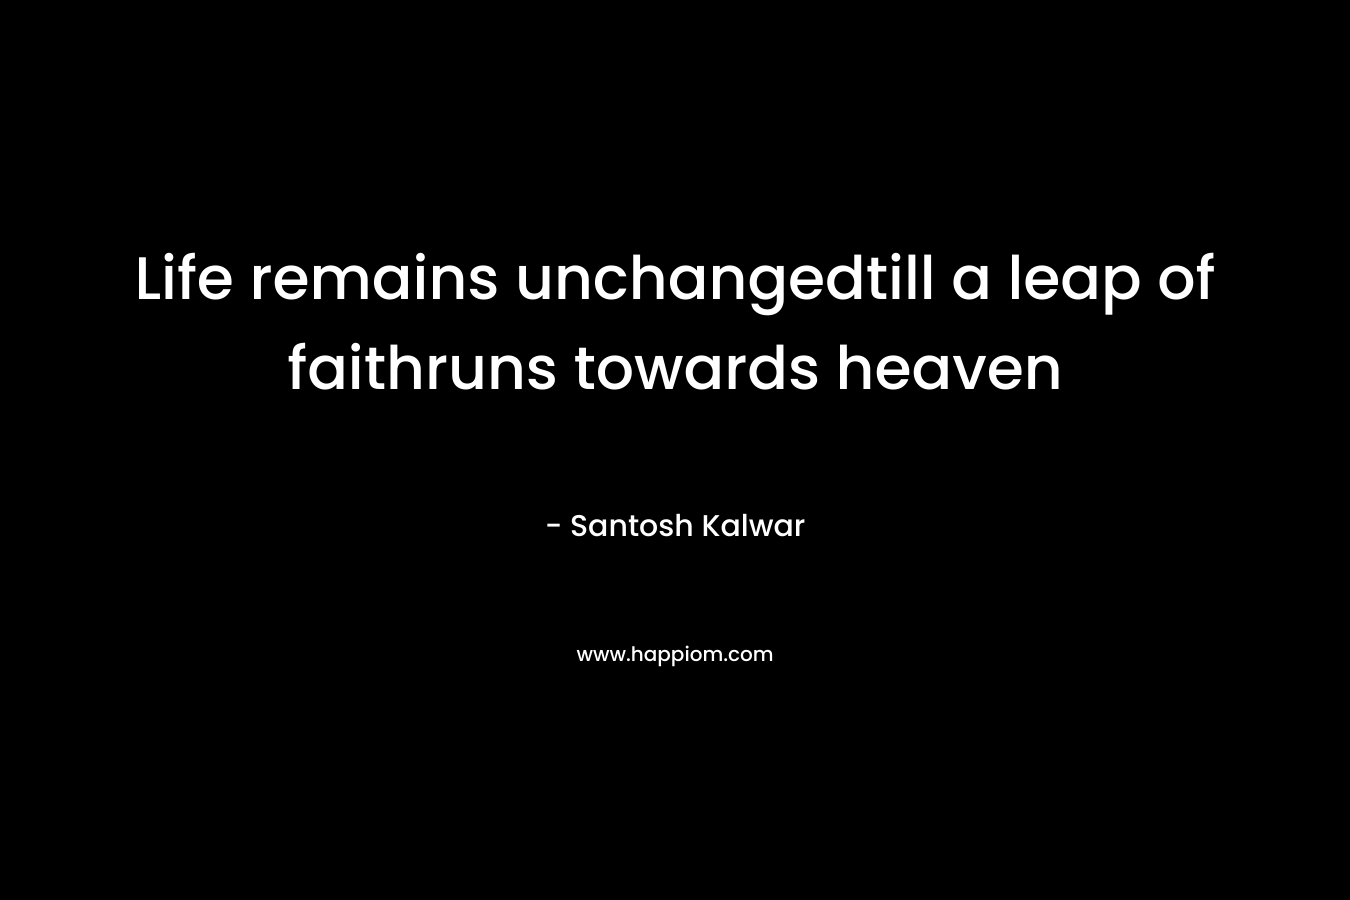 Life remains unchangedtill a leap of faithruns towards heaven